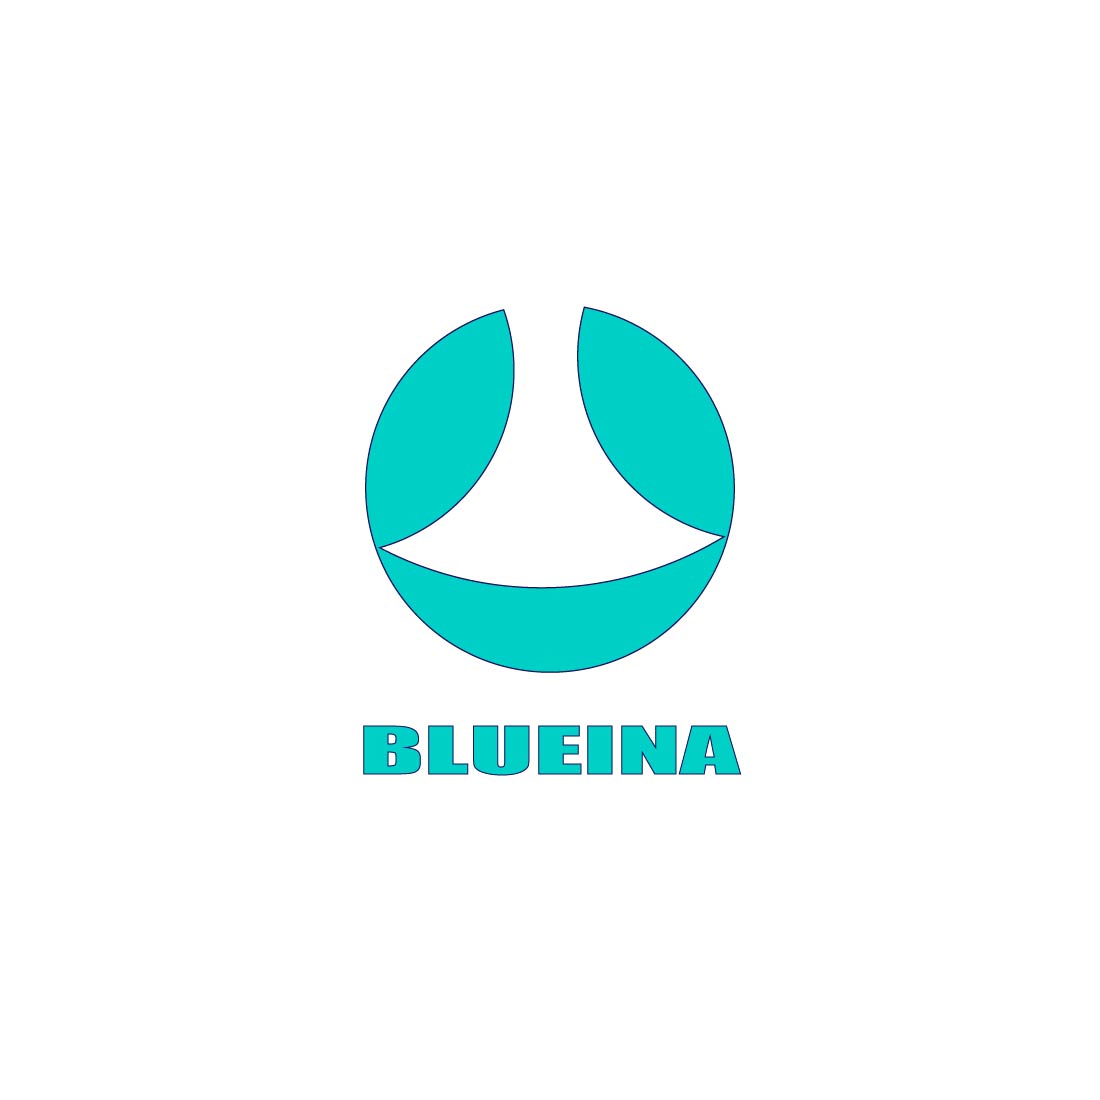 blueina 01 794